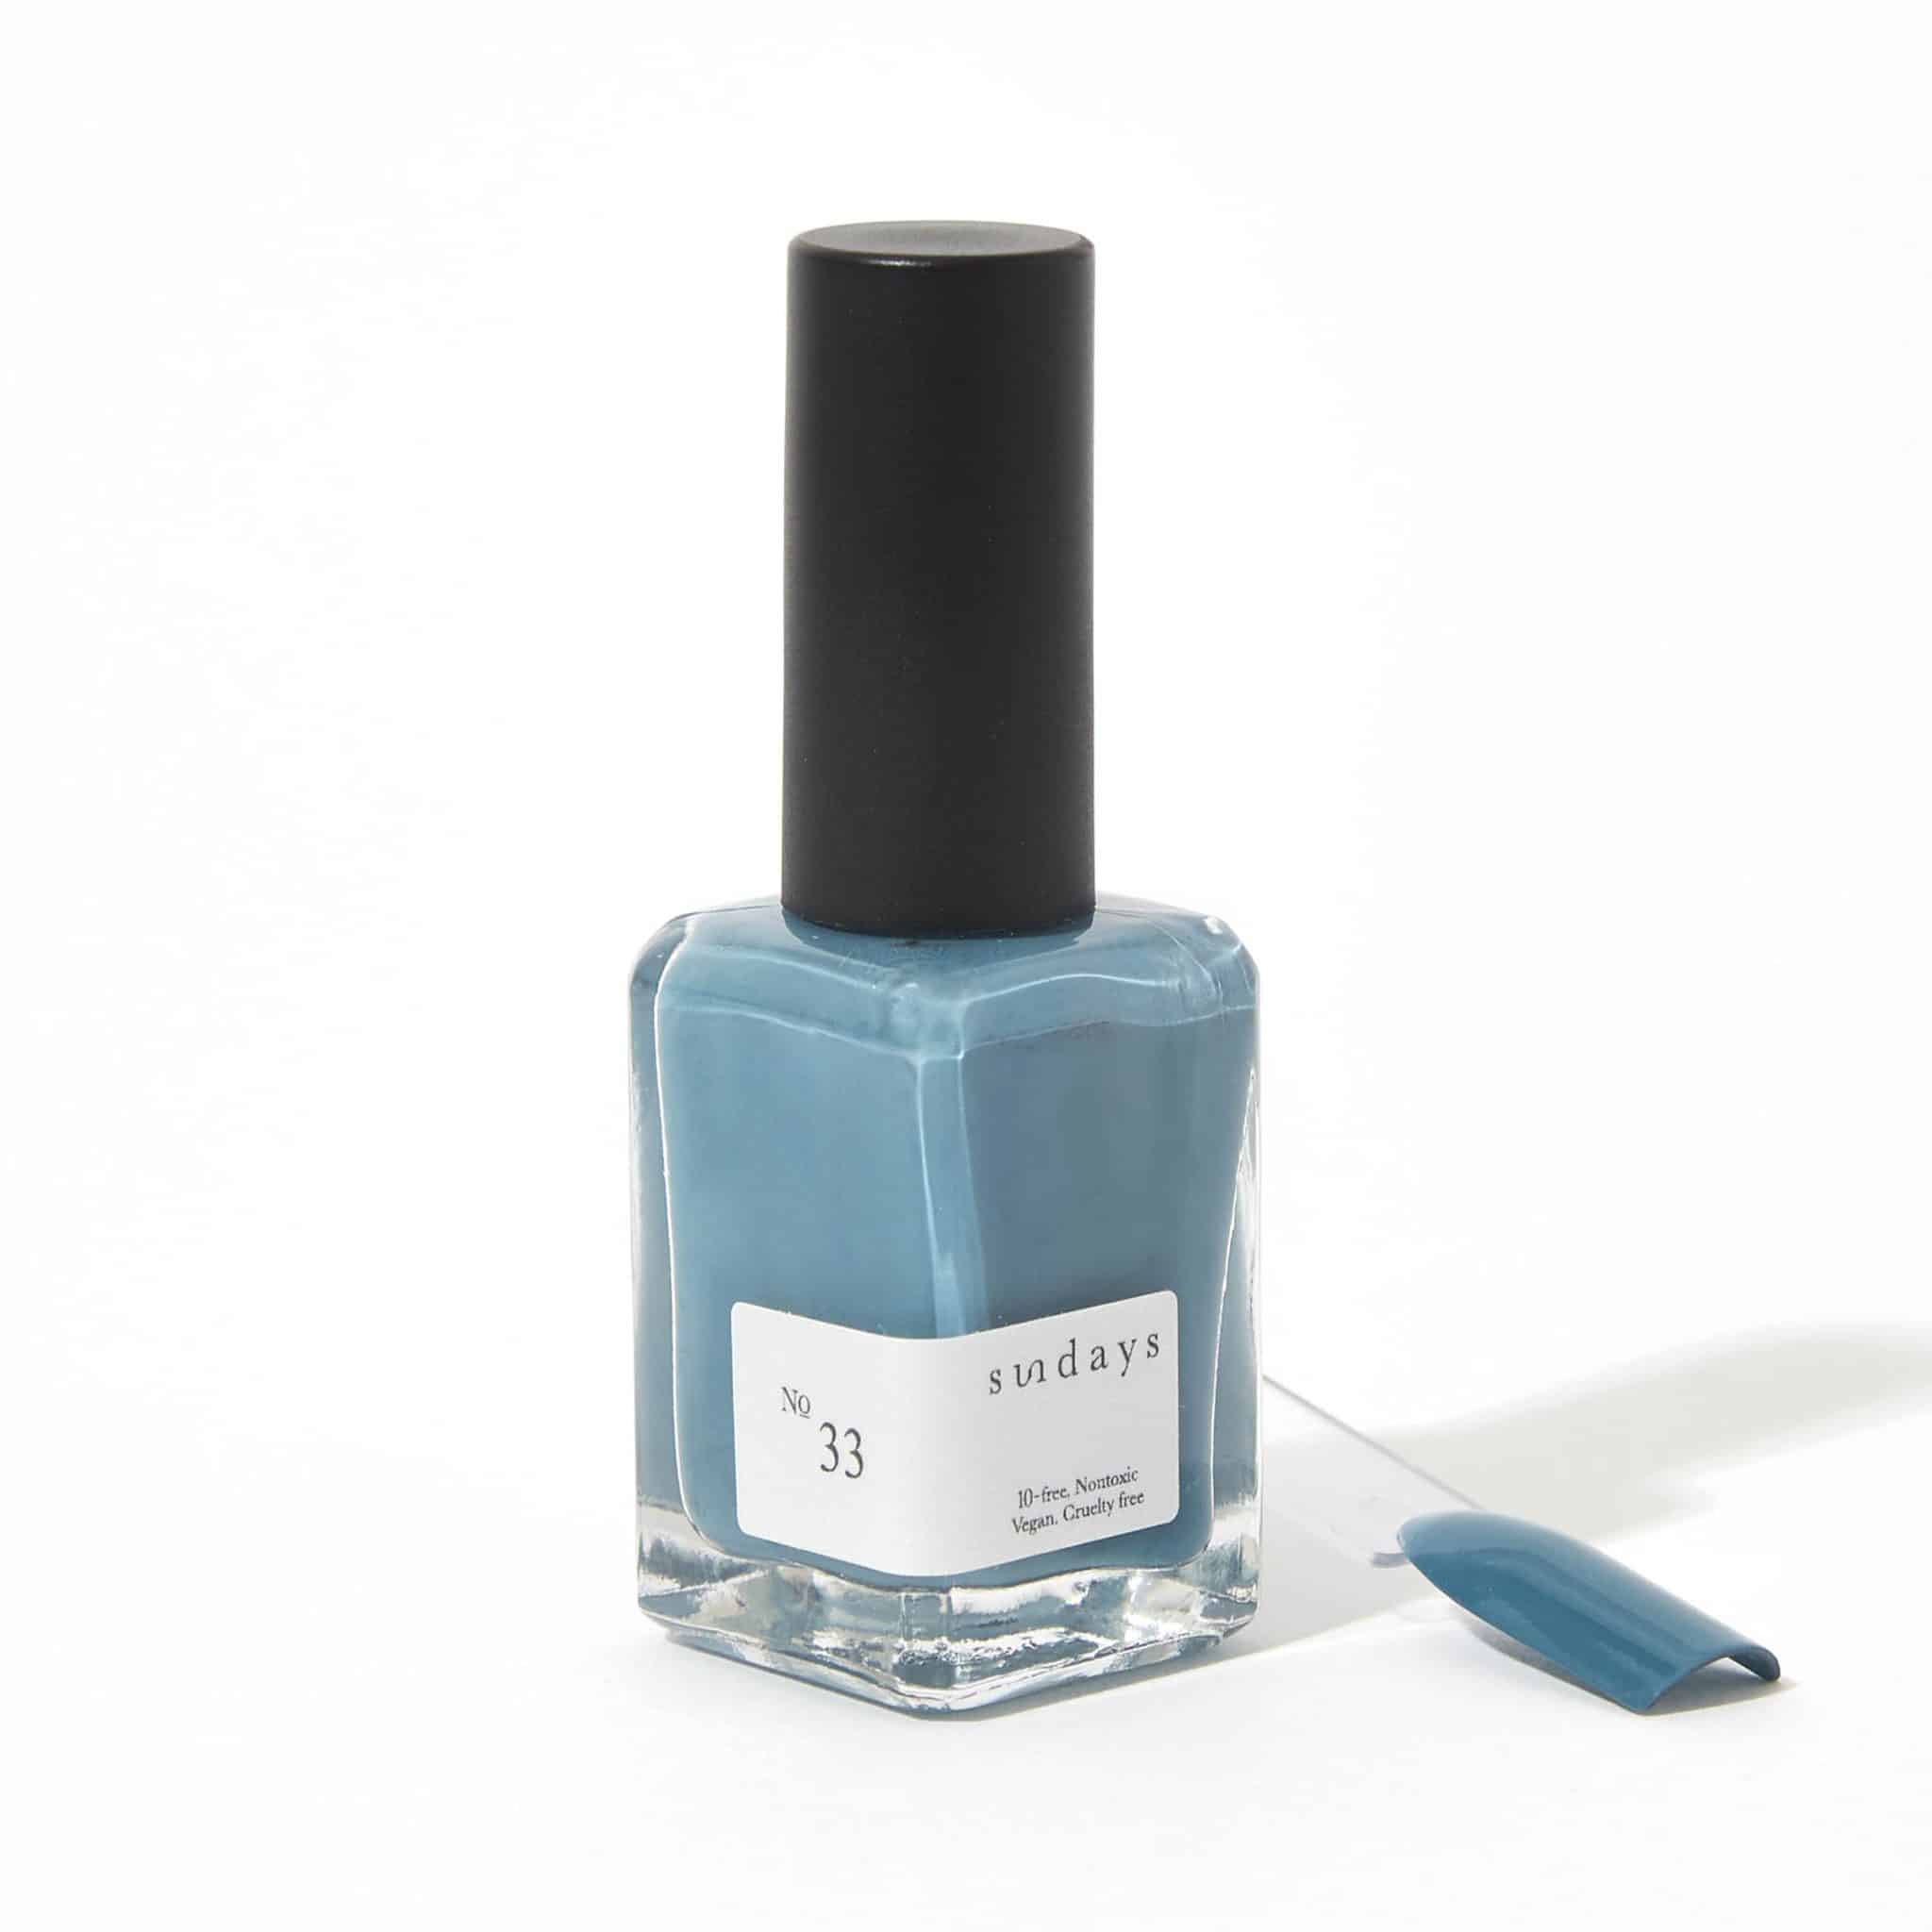 Non-toxic nail polish in steel blue